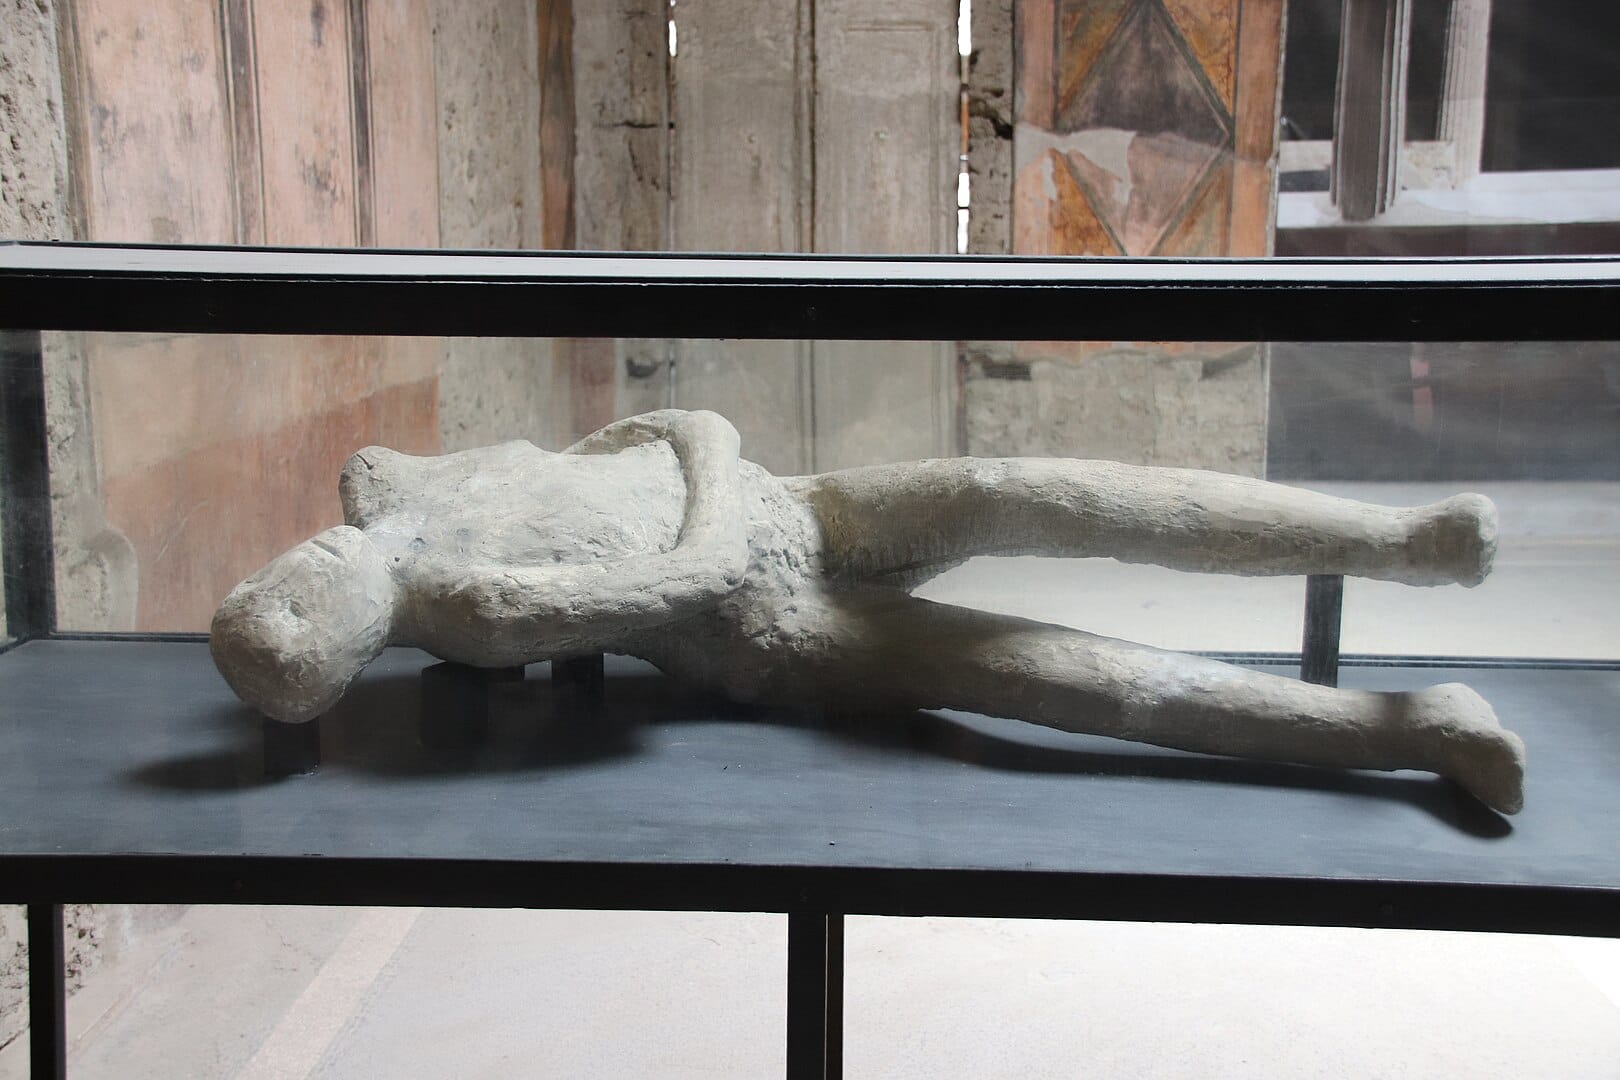 Pompeii Ruins: Cast of Human Victim at Villa of the Mysteries